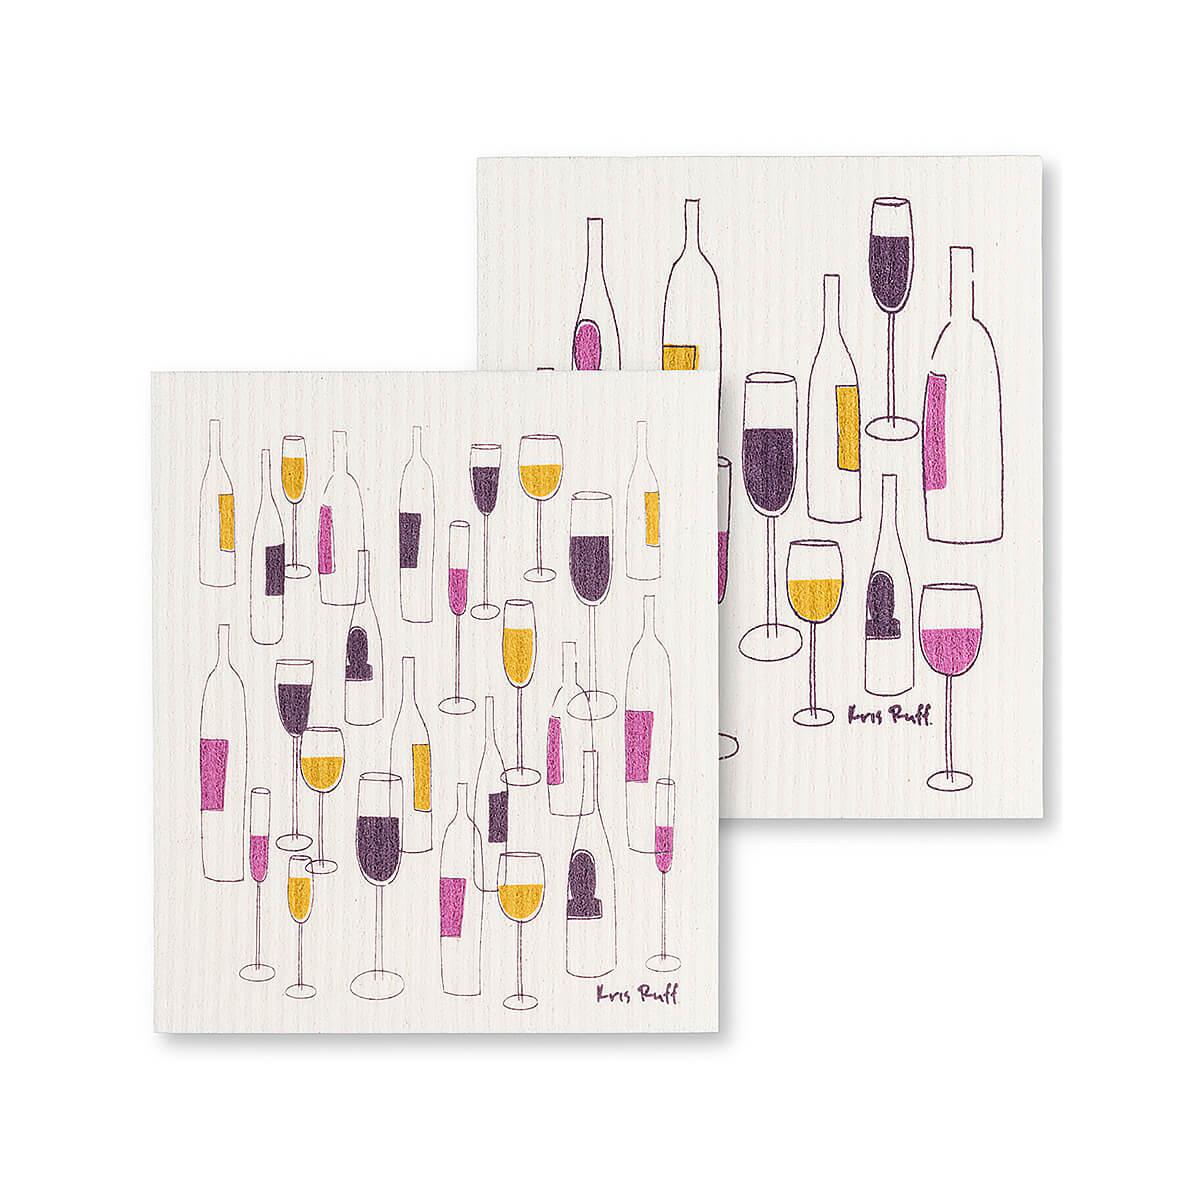  Swedish Wine Bottles And Glasses Dishcloths - 2 Pack